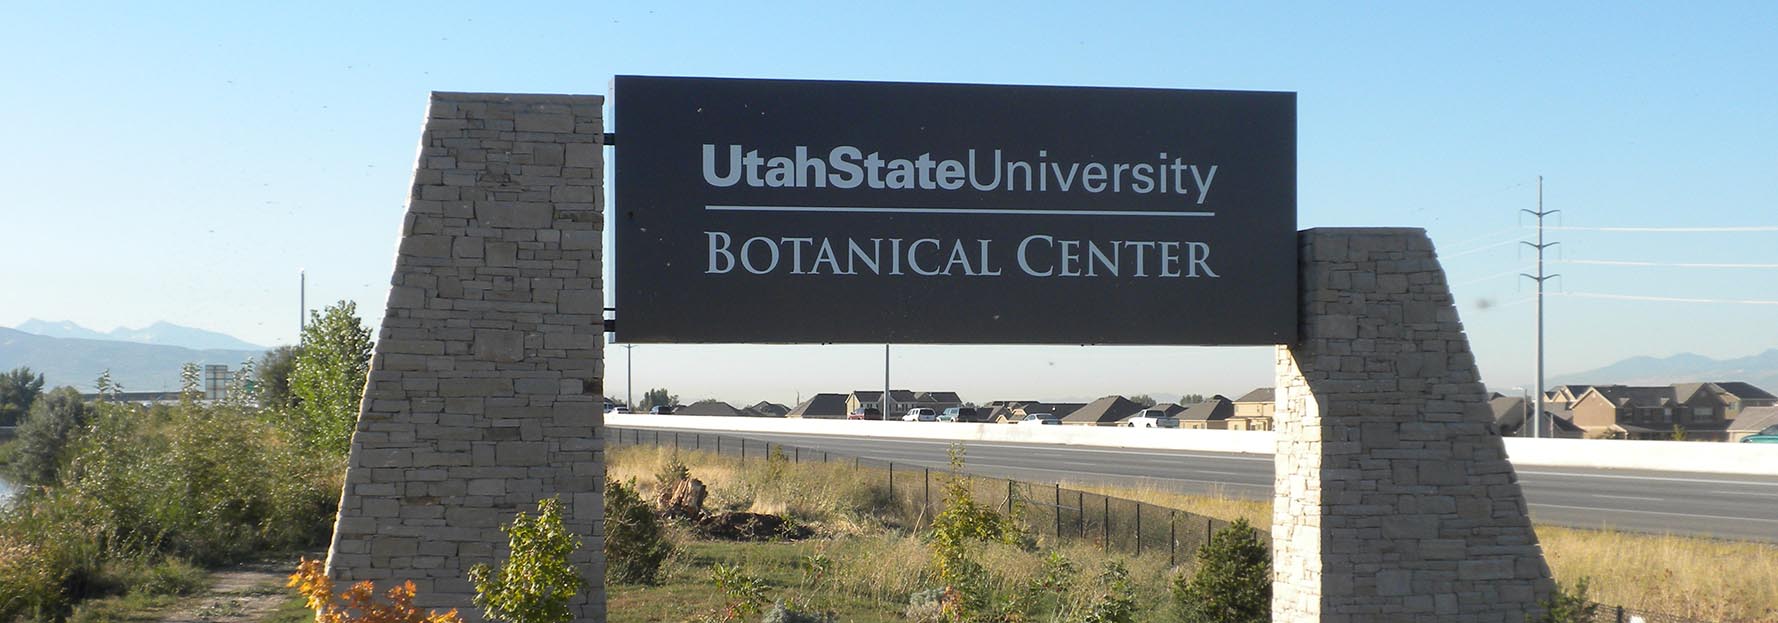 Utah State University Botanical Center Sign